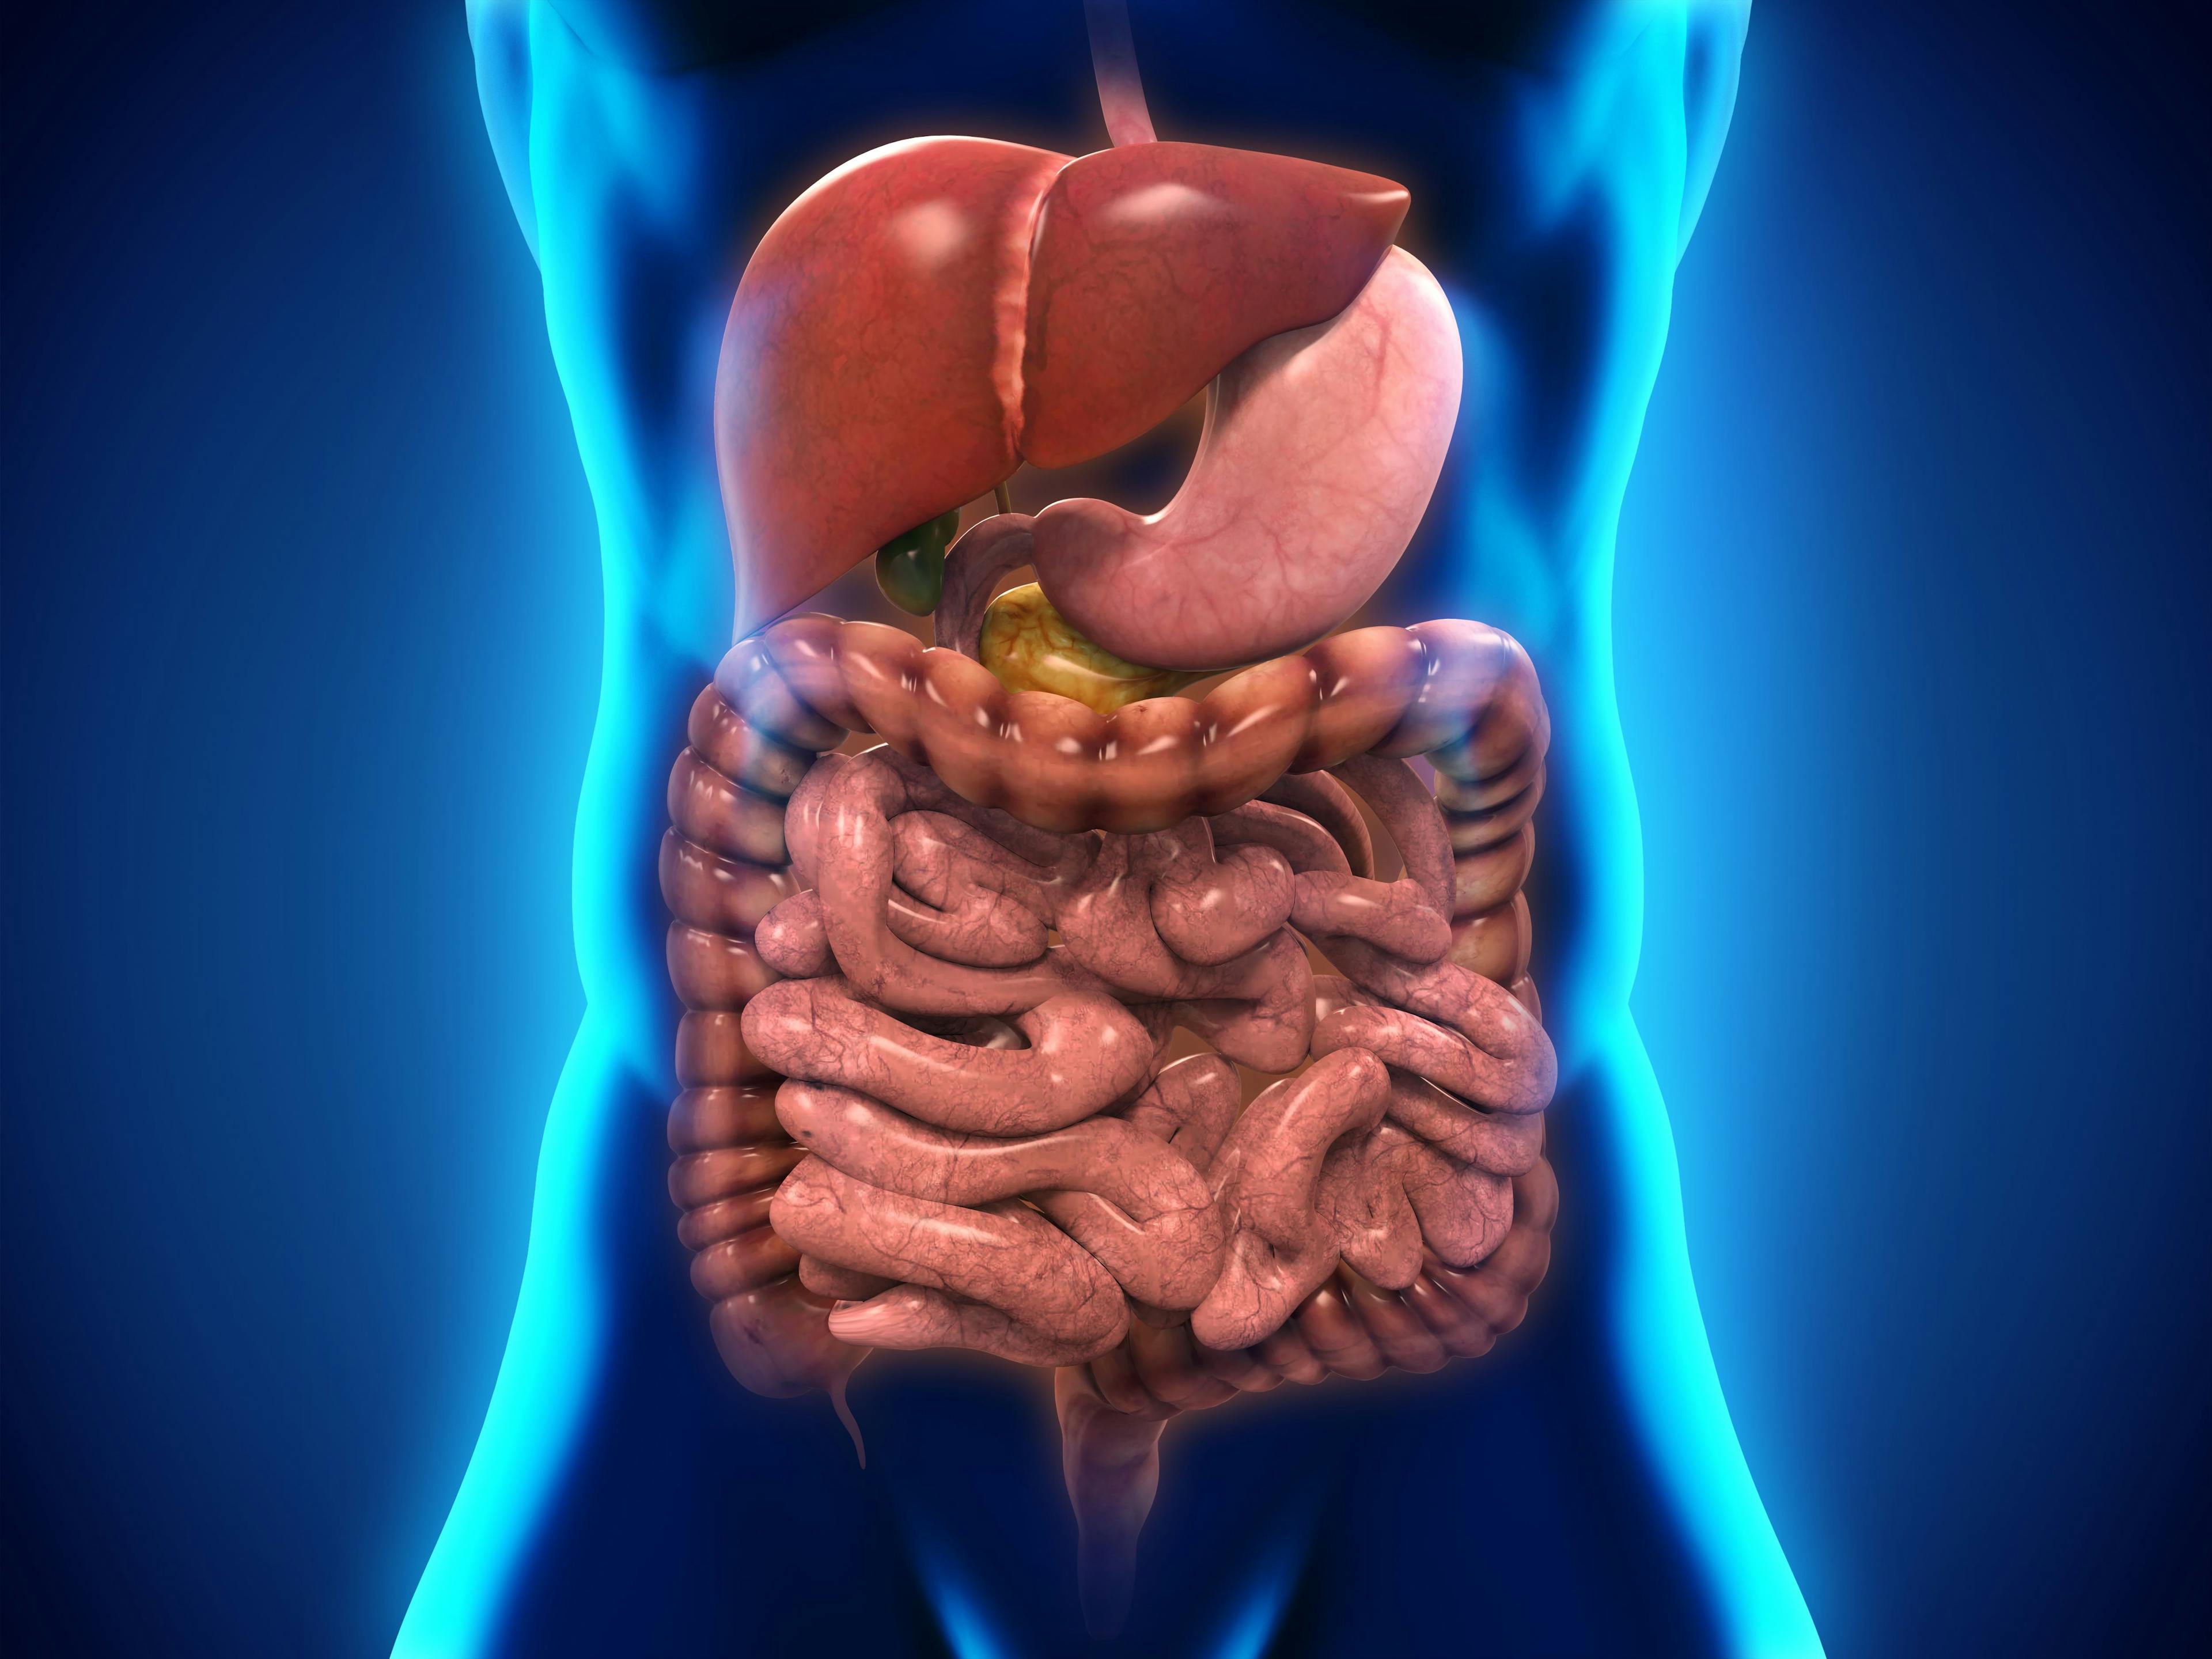 abdominal organs